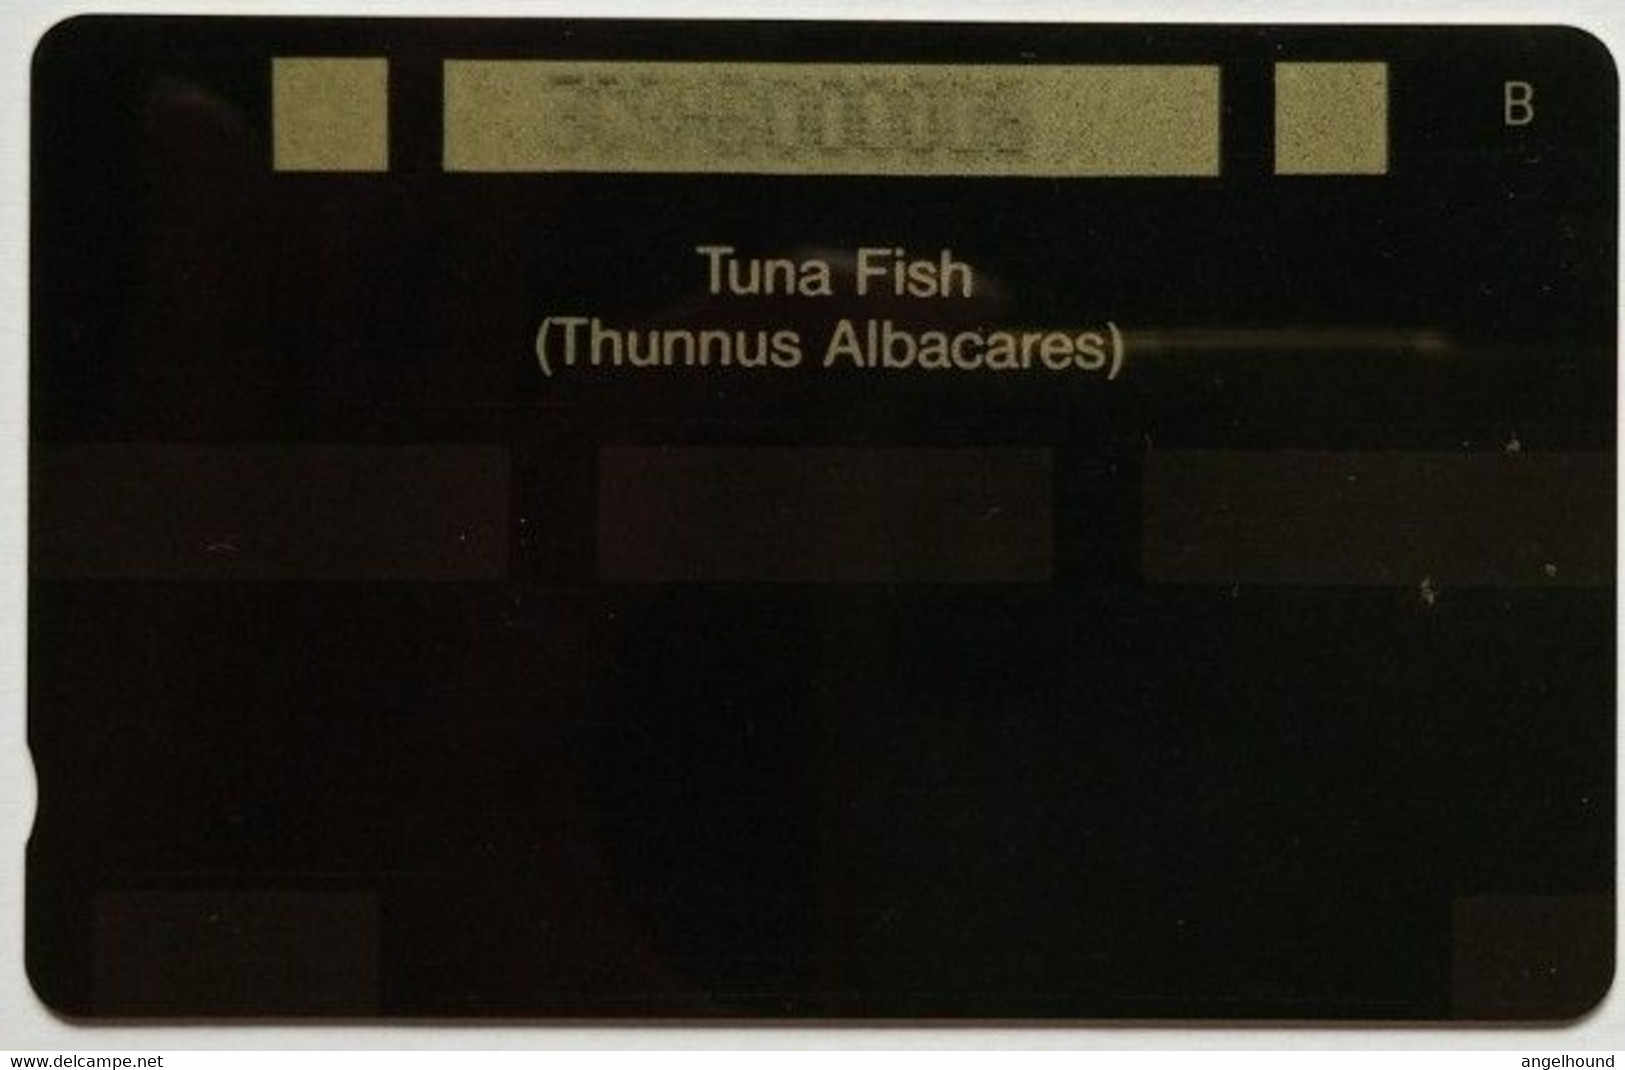 St. Helena Cable And Wireless £5 3CSHB " Tuna Fish ( New CW Logo )" - St. Helena Island